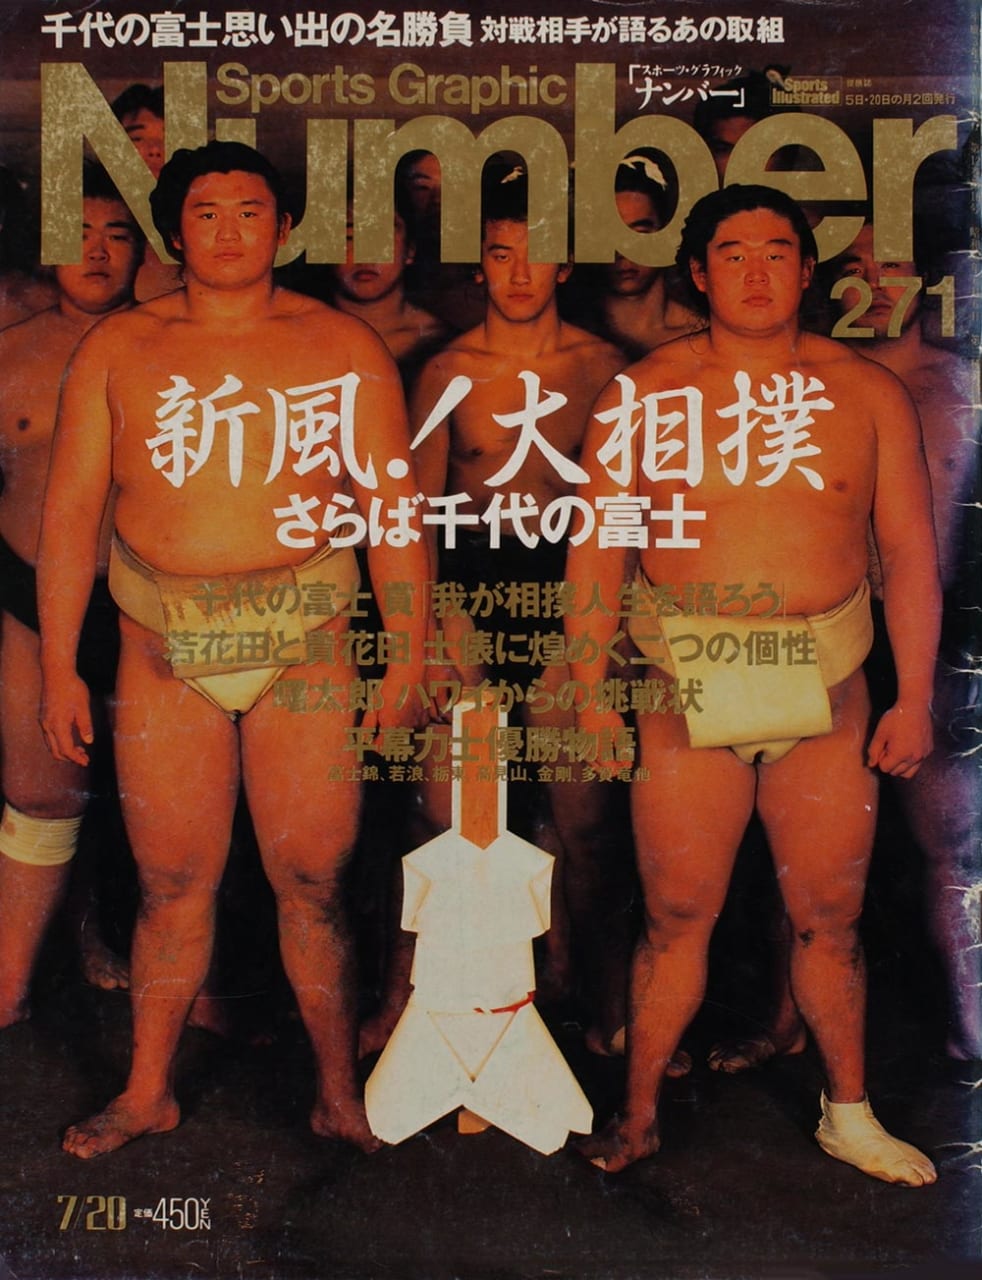 Sports Graphic Number 271号
1991年7月5日発売
表紙撮影：大沢尚芳